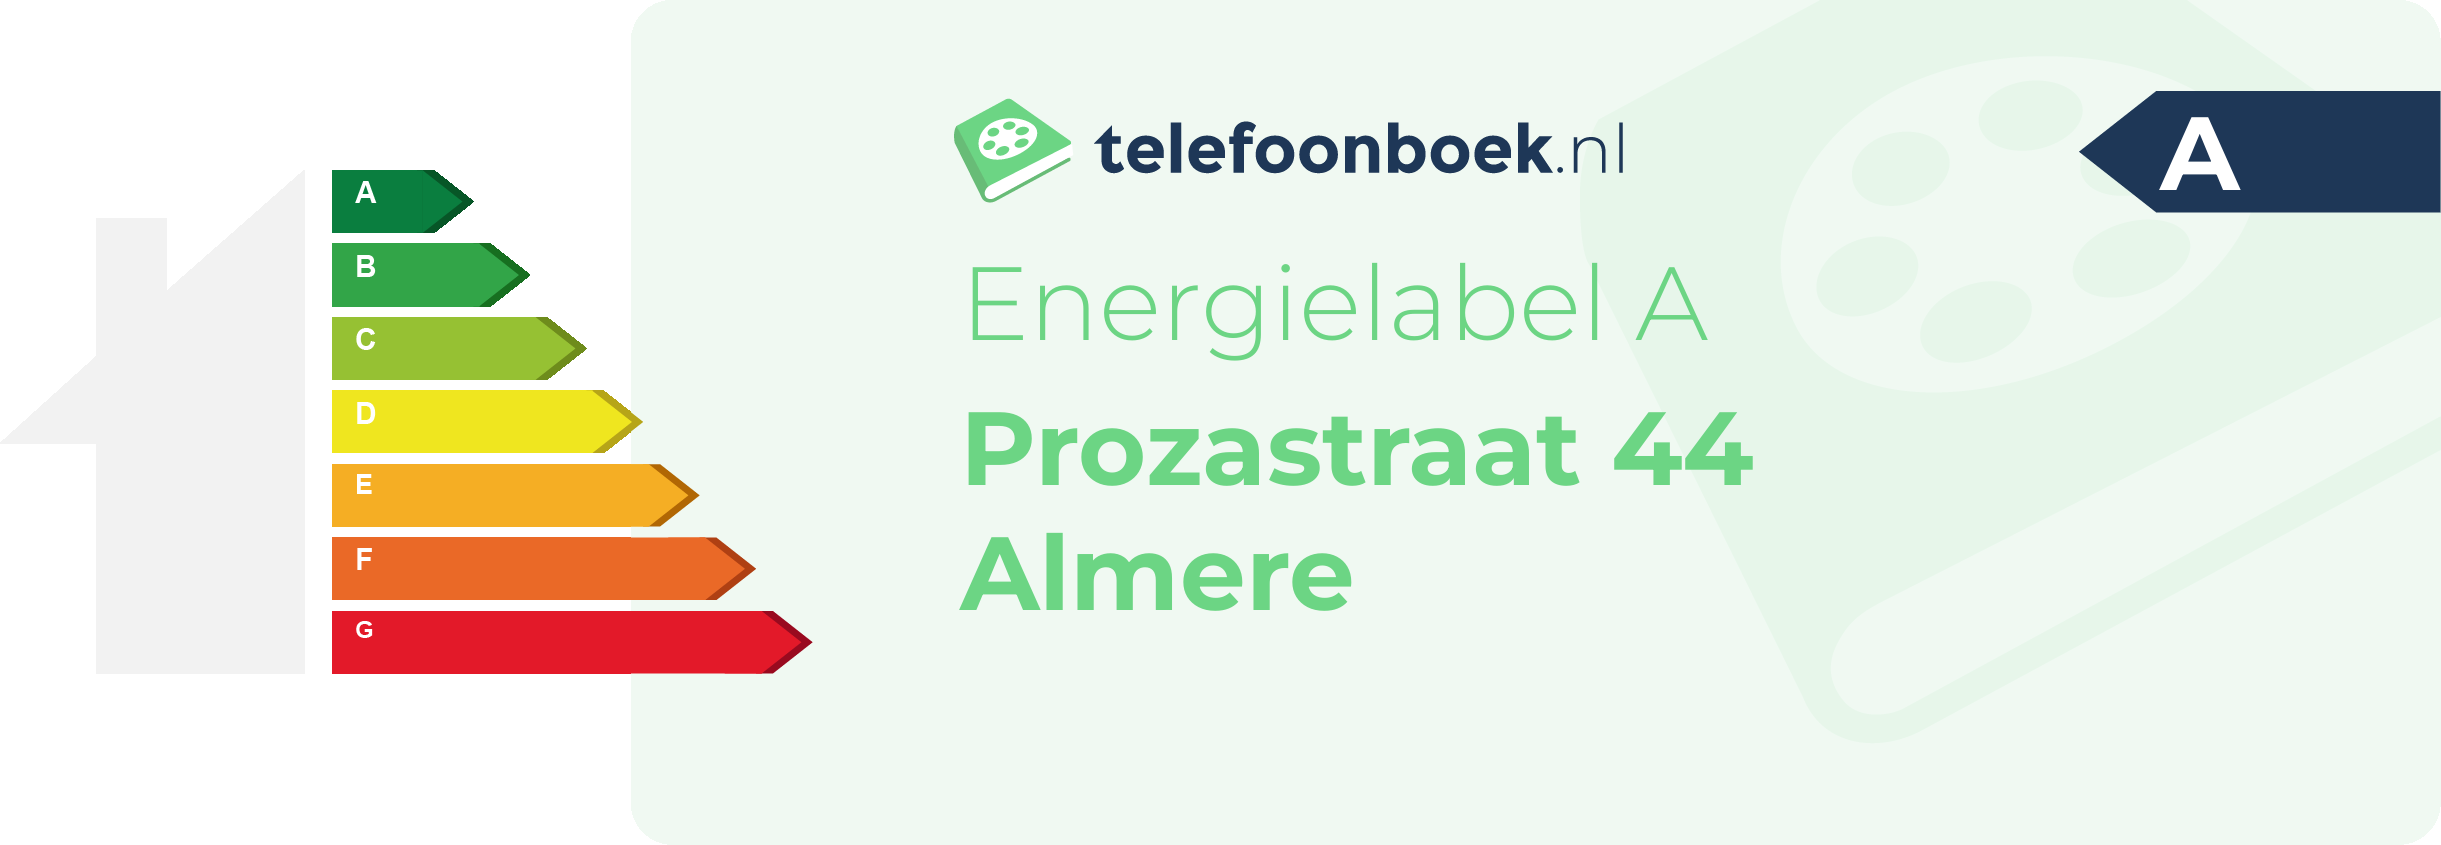 Energielabel Prozastraat 44 Almere